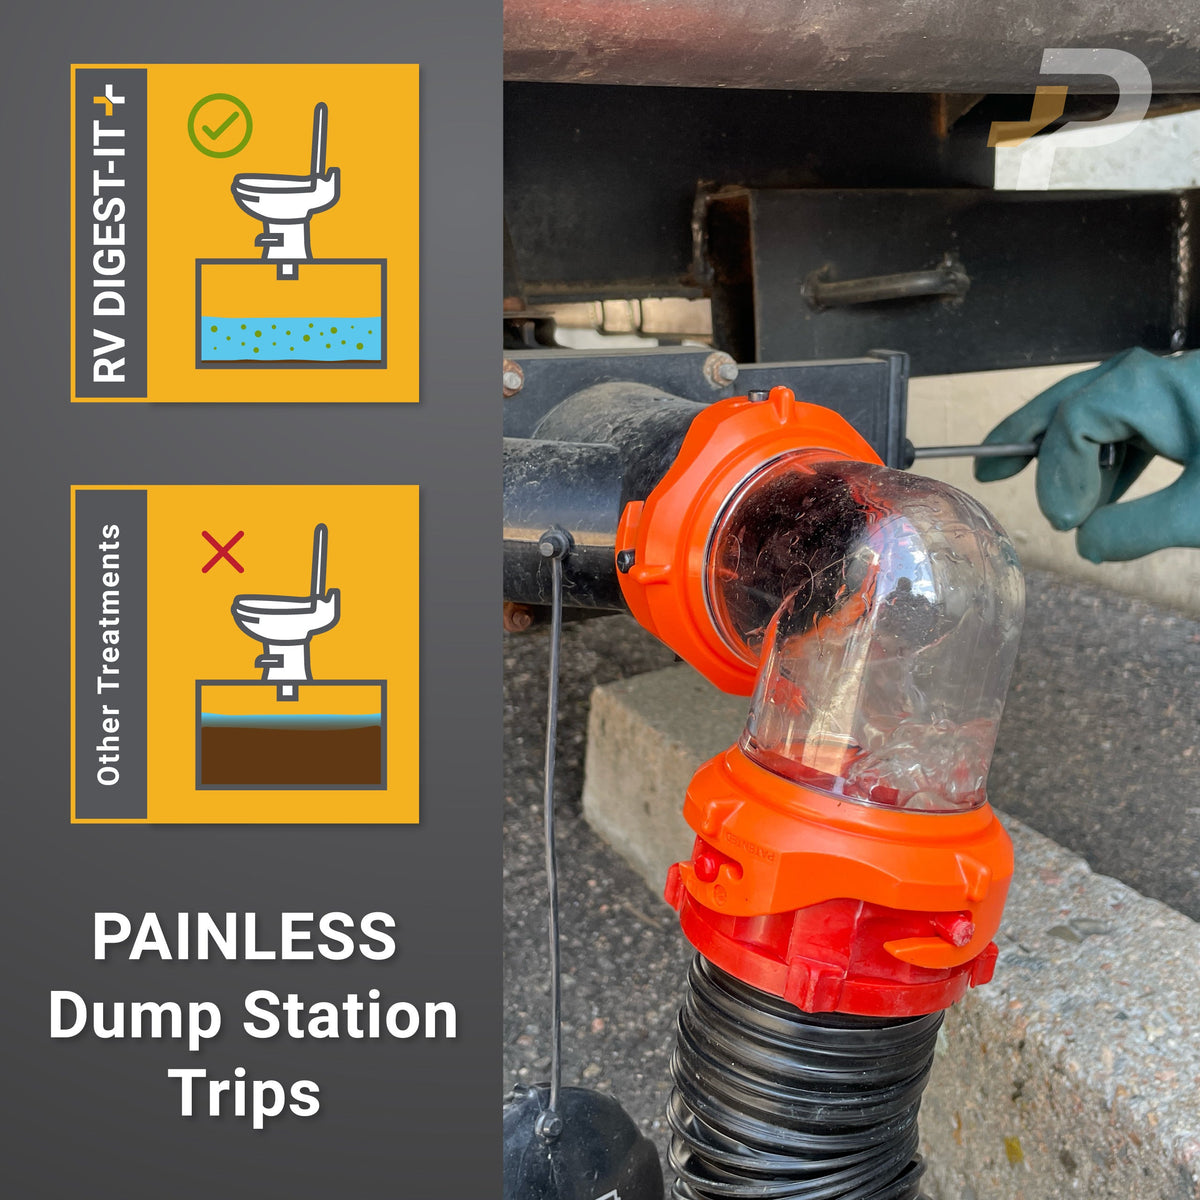 Painless Dumpstation Trips. RV Digest-It Plus Drop-In